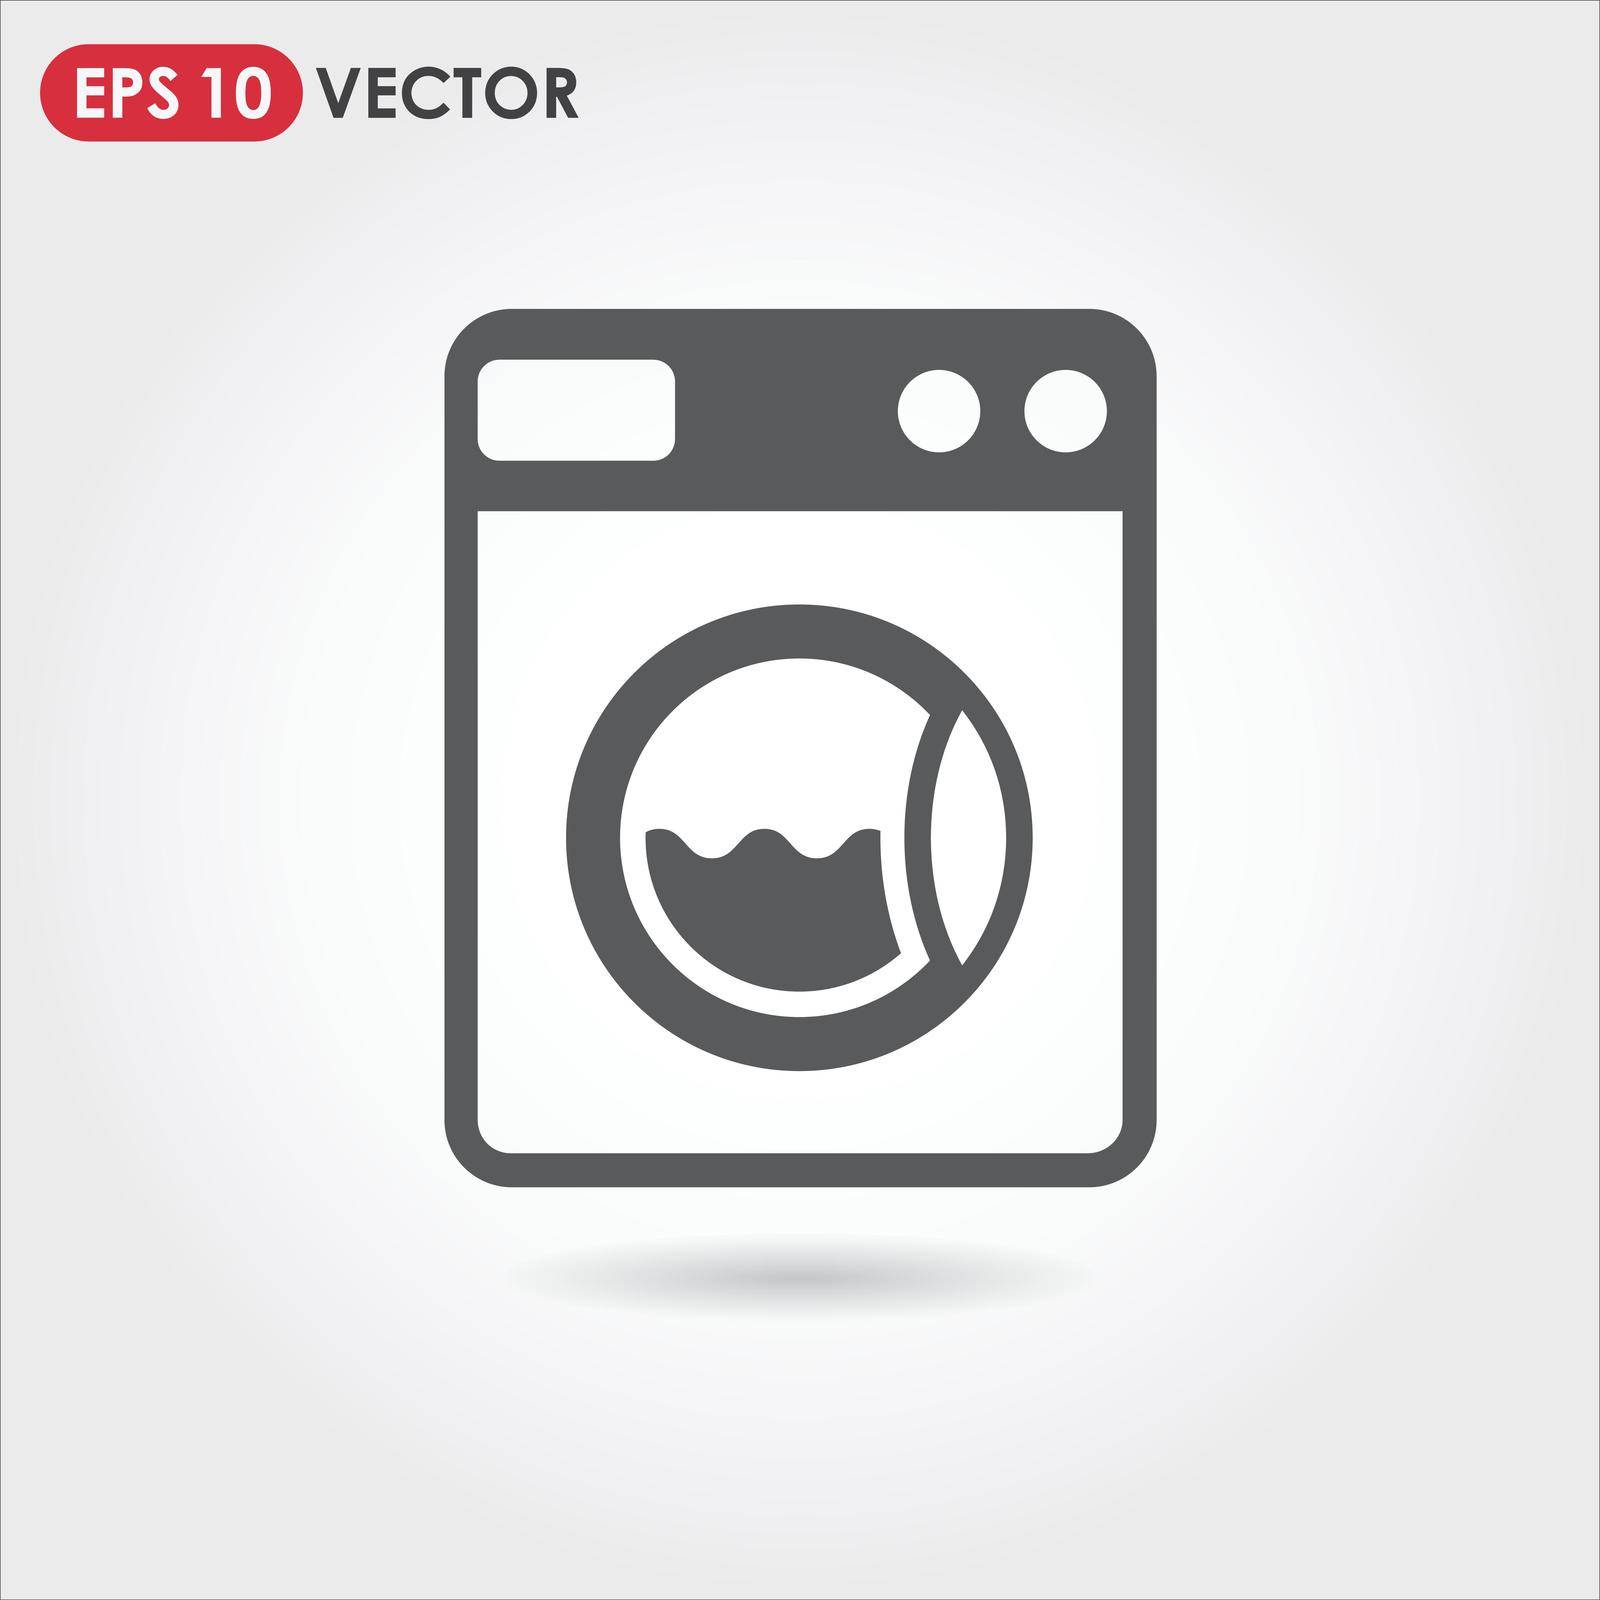 washing machine single vector icon on light background